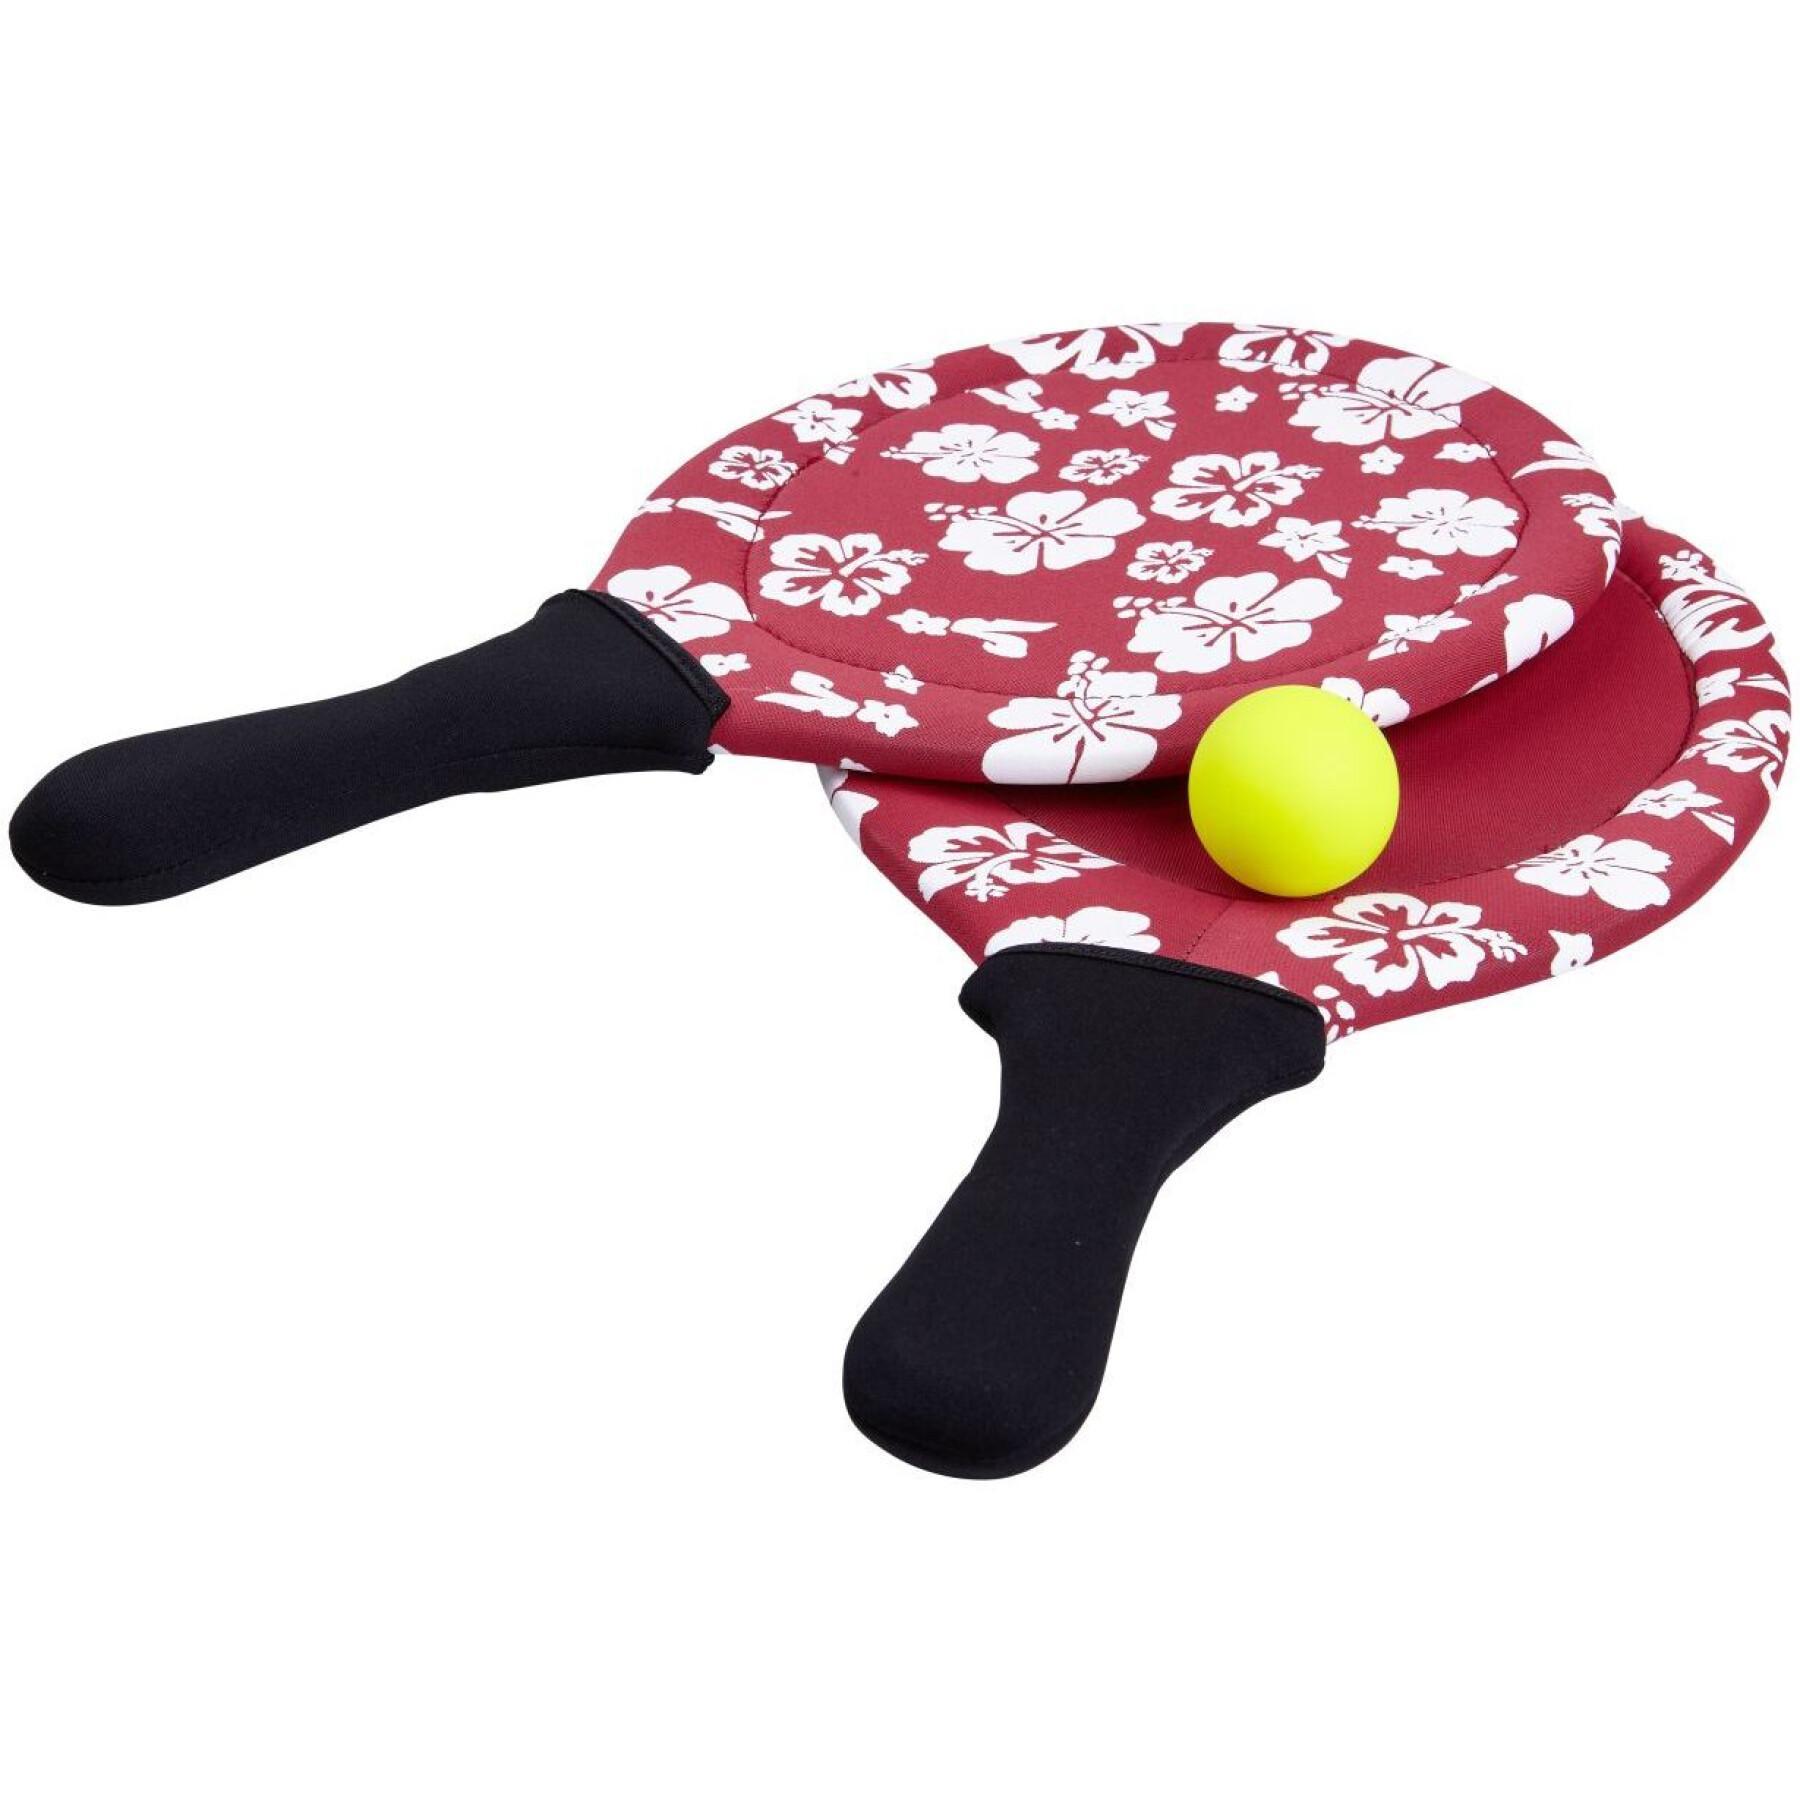 Children's table tennis racket Tanga sports Neoprene